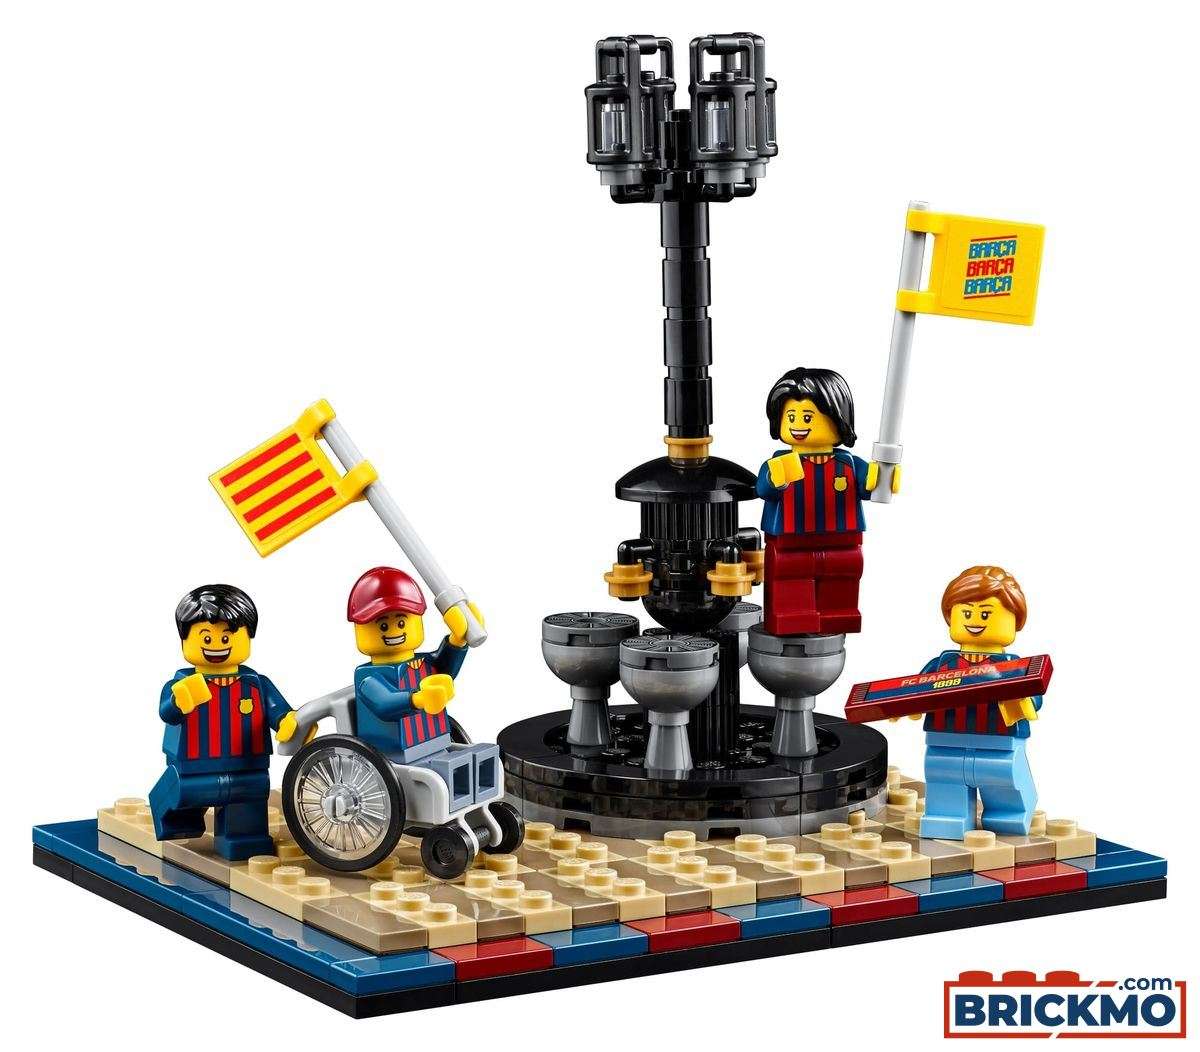 LEGO 40485 FC Barcelona Celebration 40485